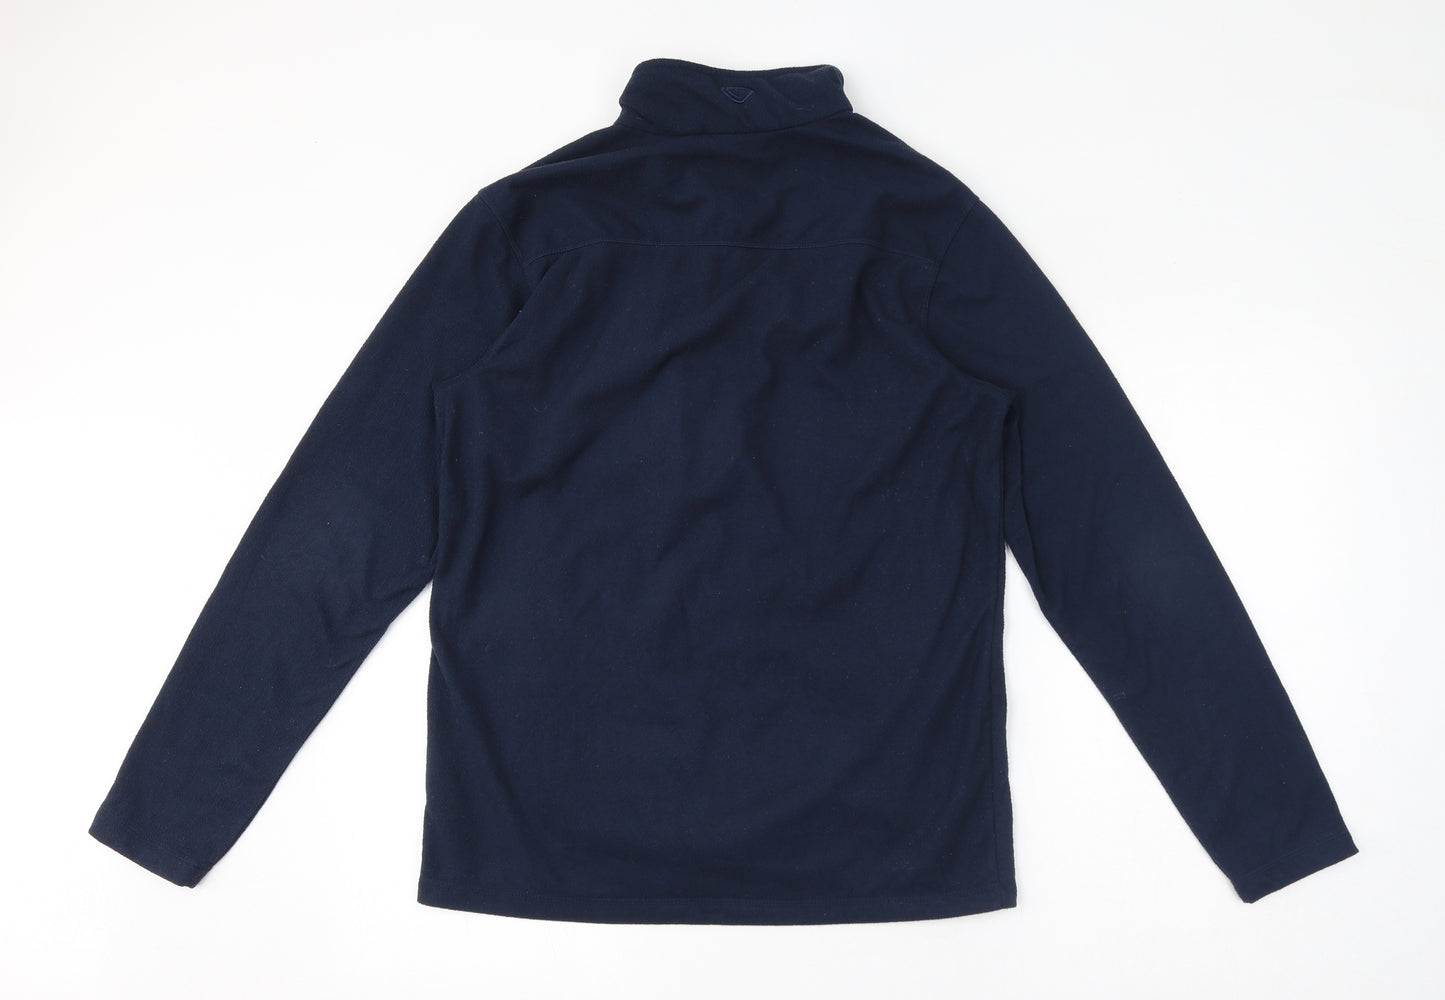 brasher Mens Blue Polyester Full Zip Sweatshirt Size M - Zipped Pockets